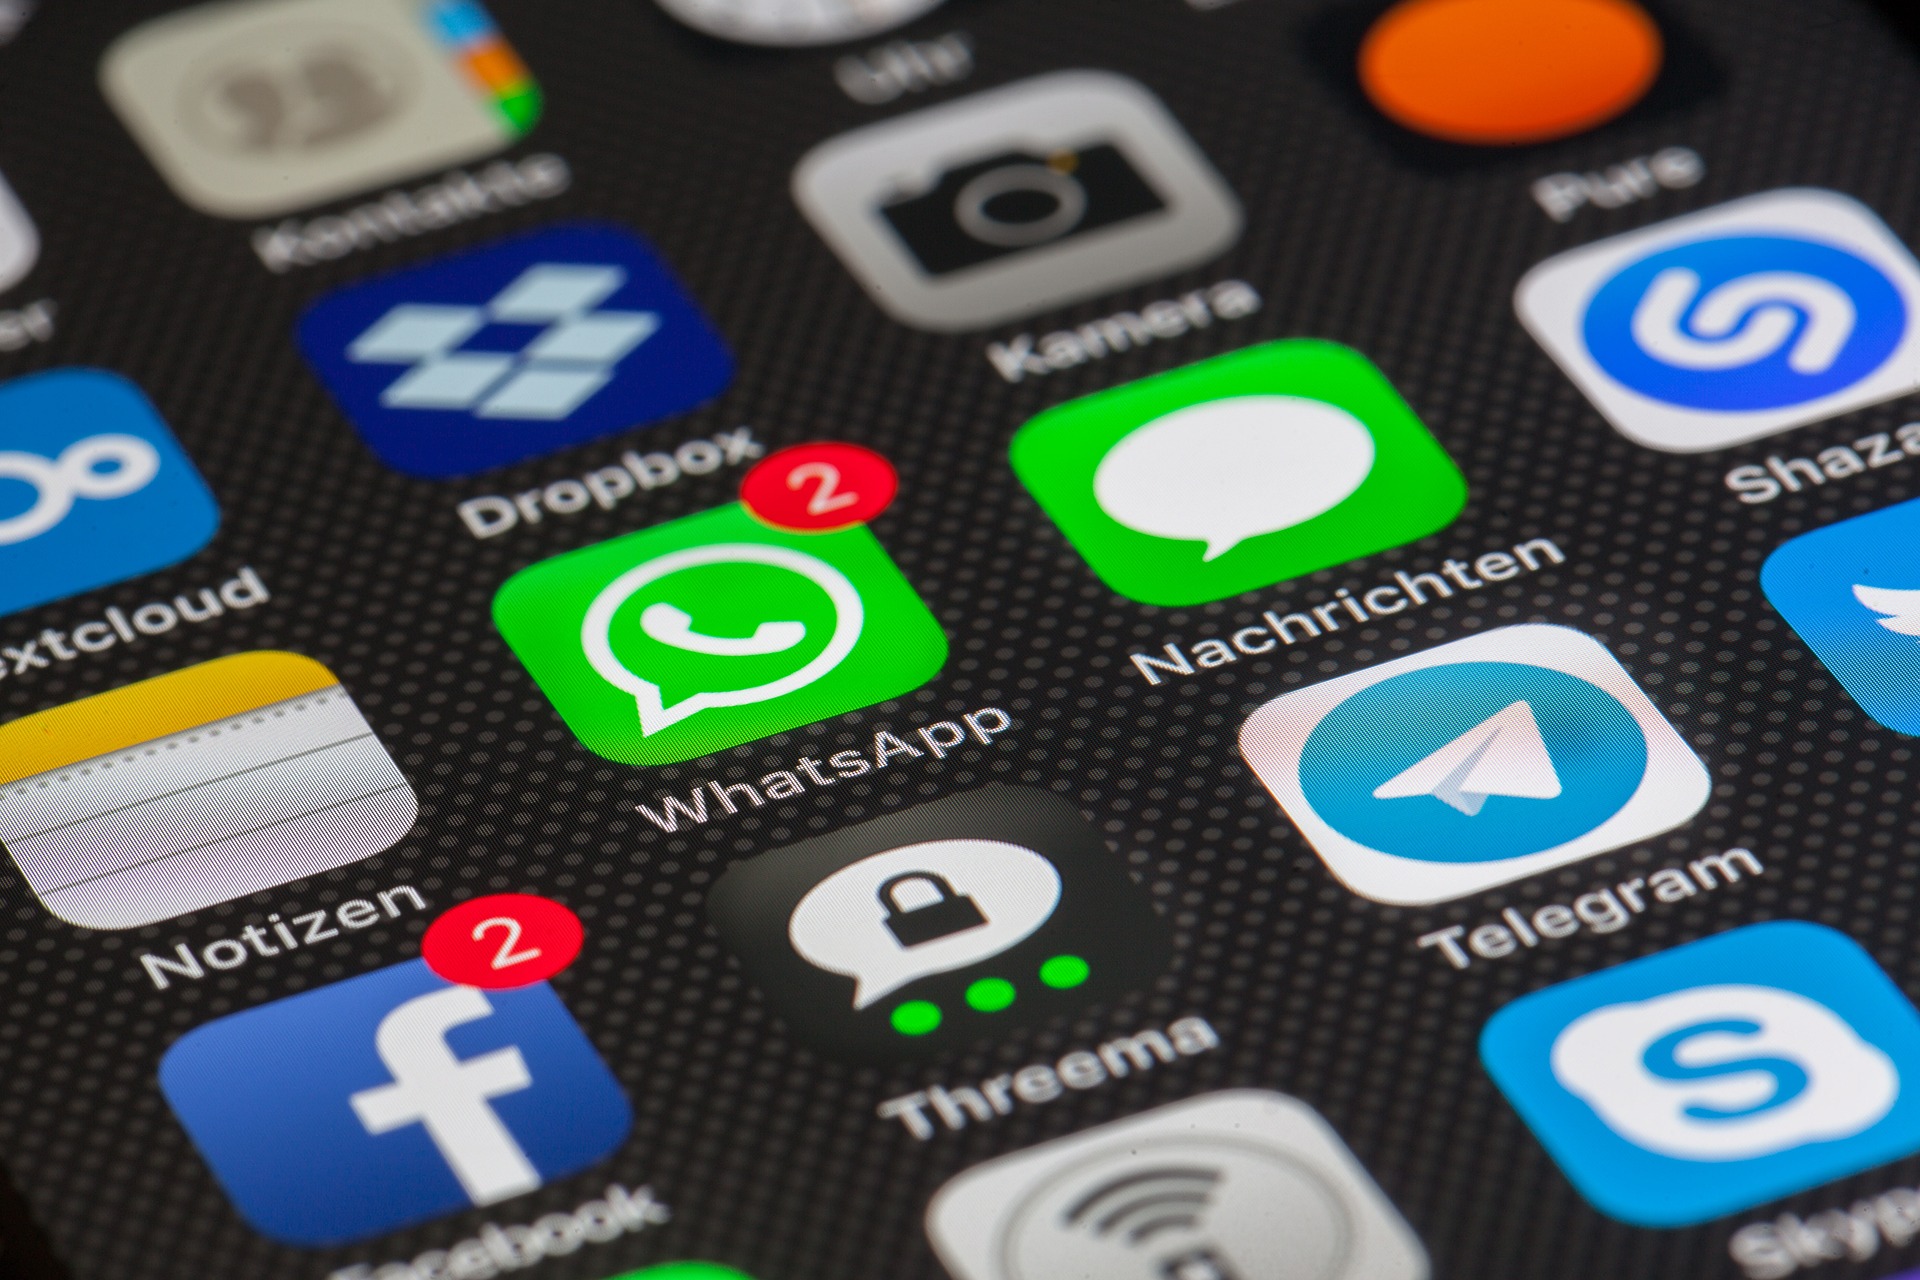 WhatsApp Users Have Data Stolen via Fake "SafeChat" App